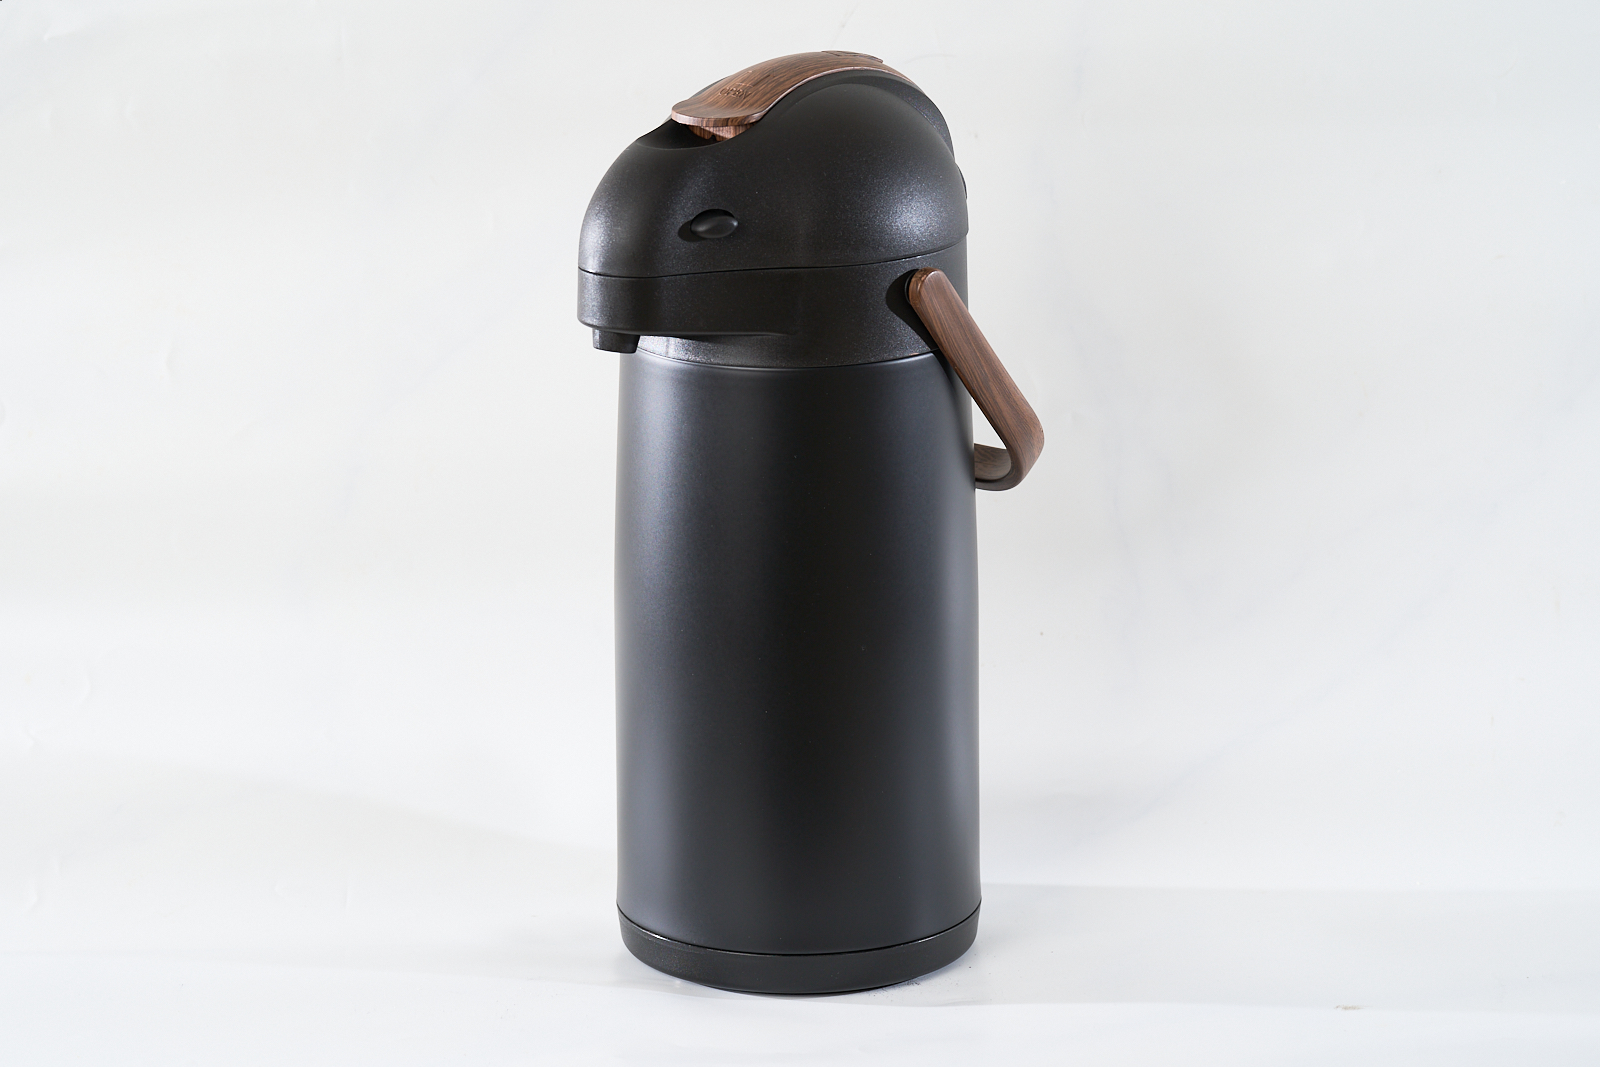 DSC06063 - Amazon hot sale wooden airpot coffee dispenser with pump 3 liter